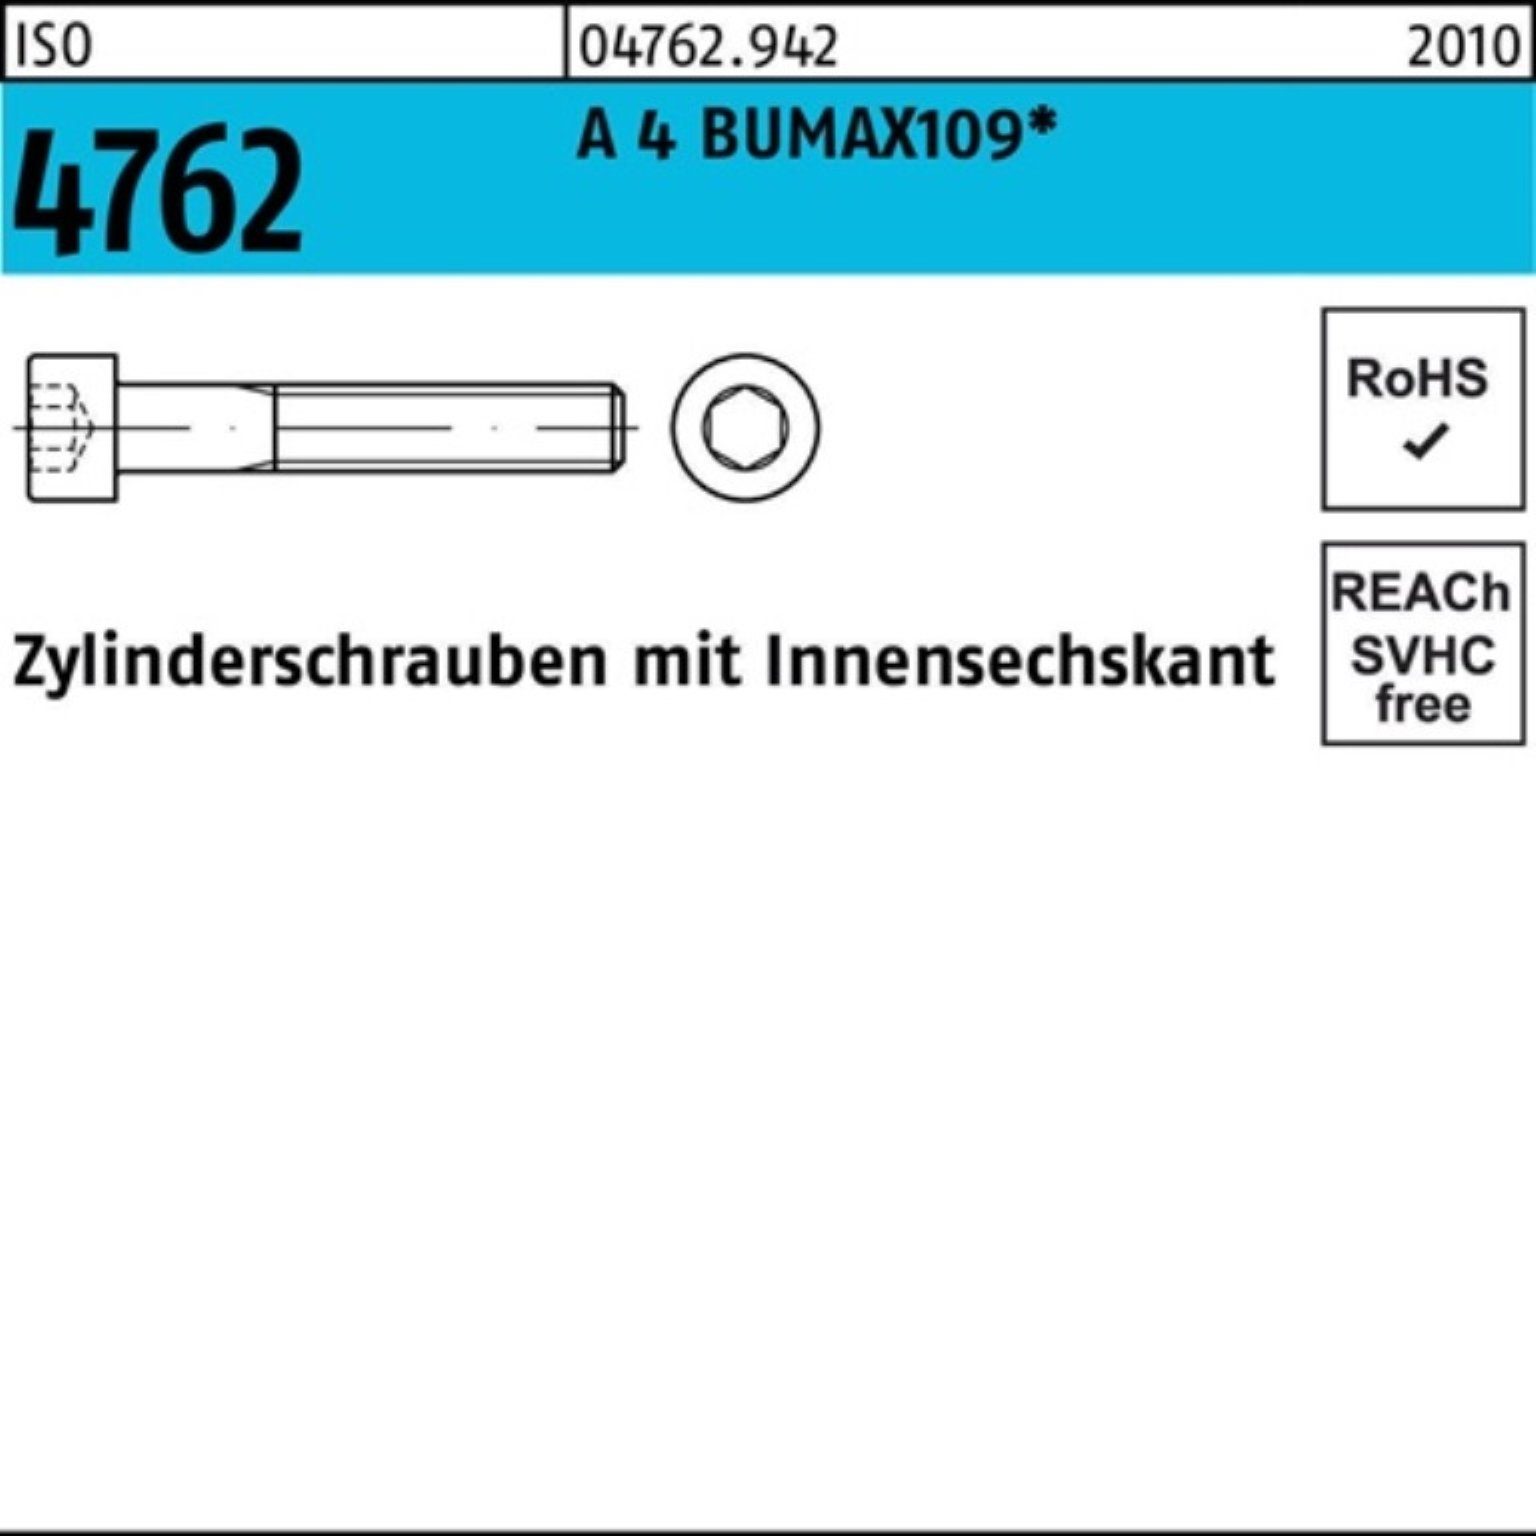 20 ISO BUMAX109 M10x Pack 4762 4 50 Innen-6kt 100er Zylinderschraube Zylinderschraube Bufab A